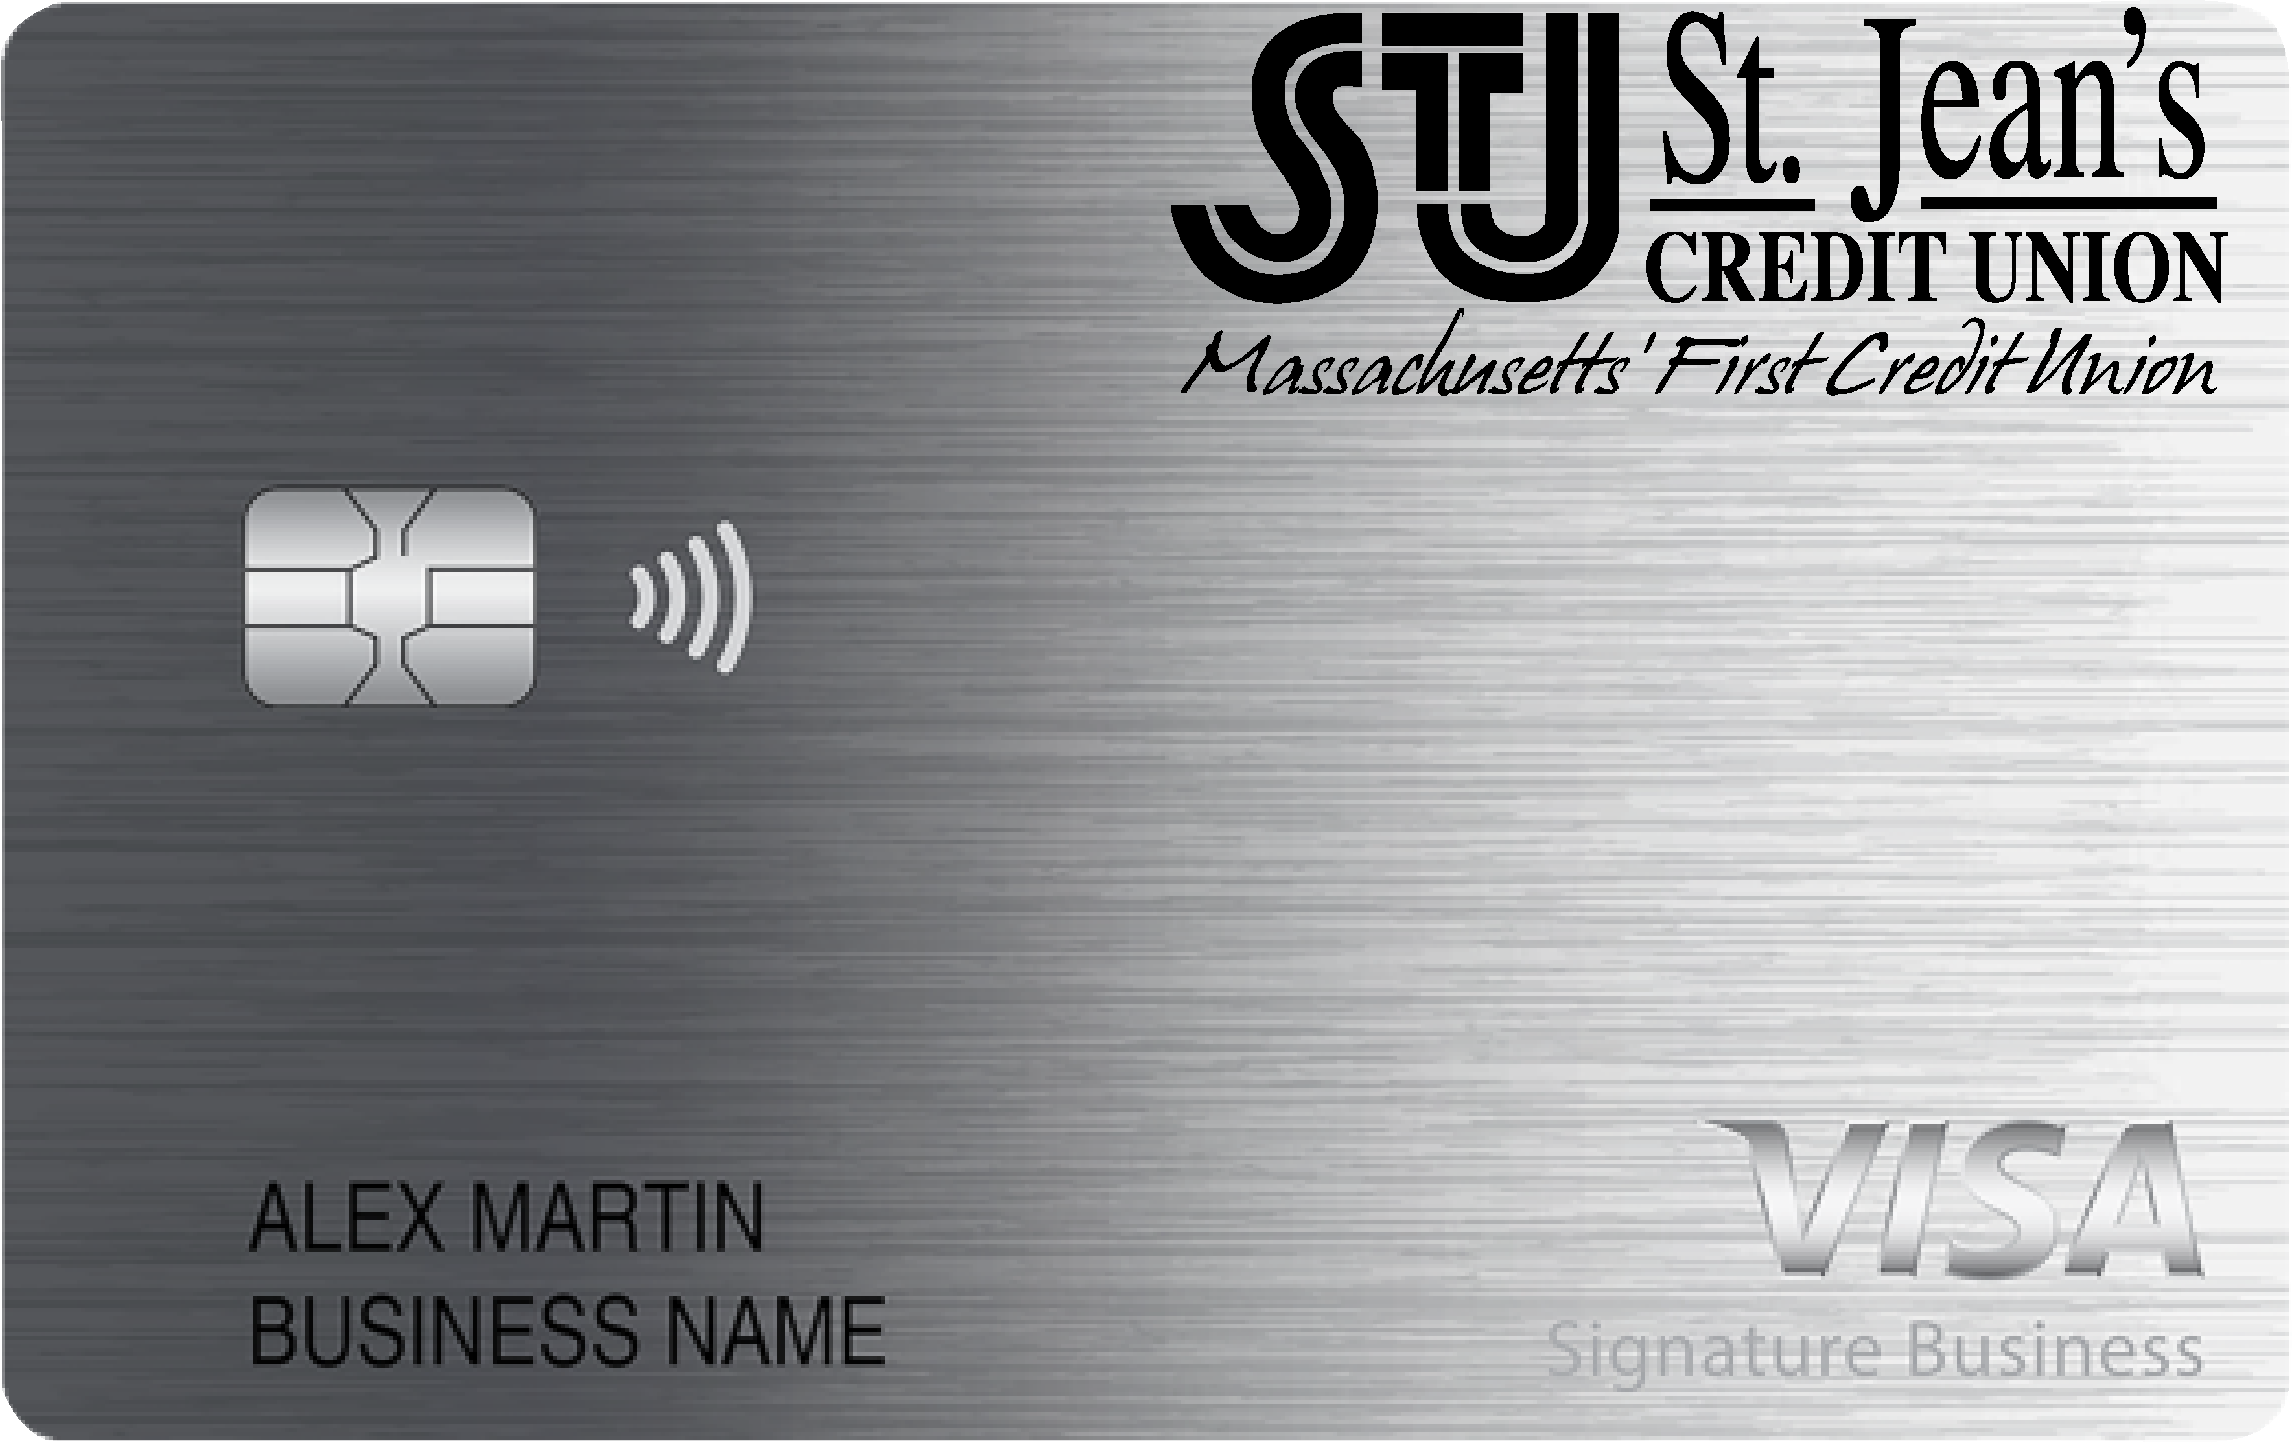 St. Jean's Credit Union Smart Business Rewards Card